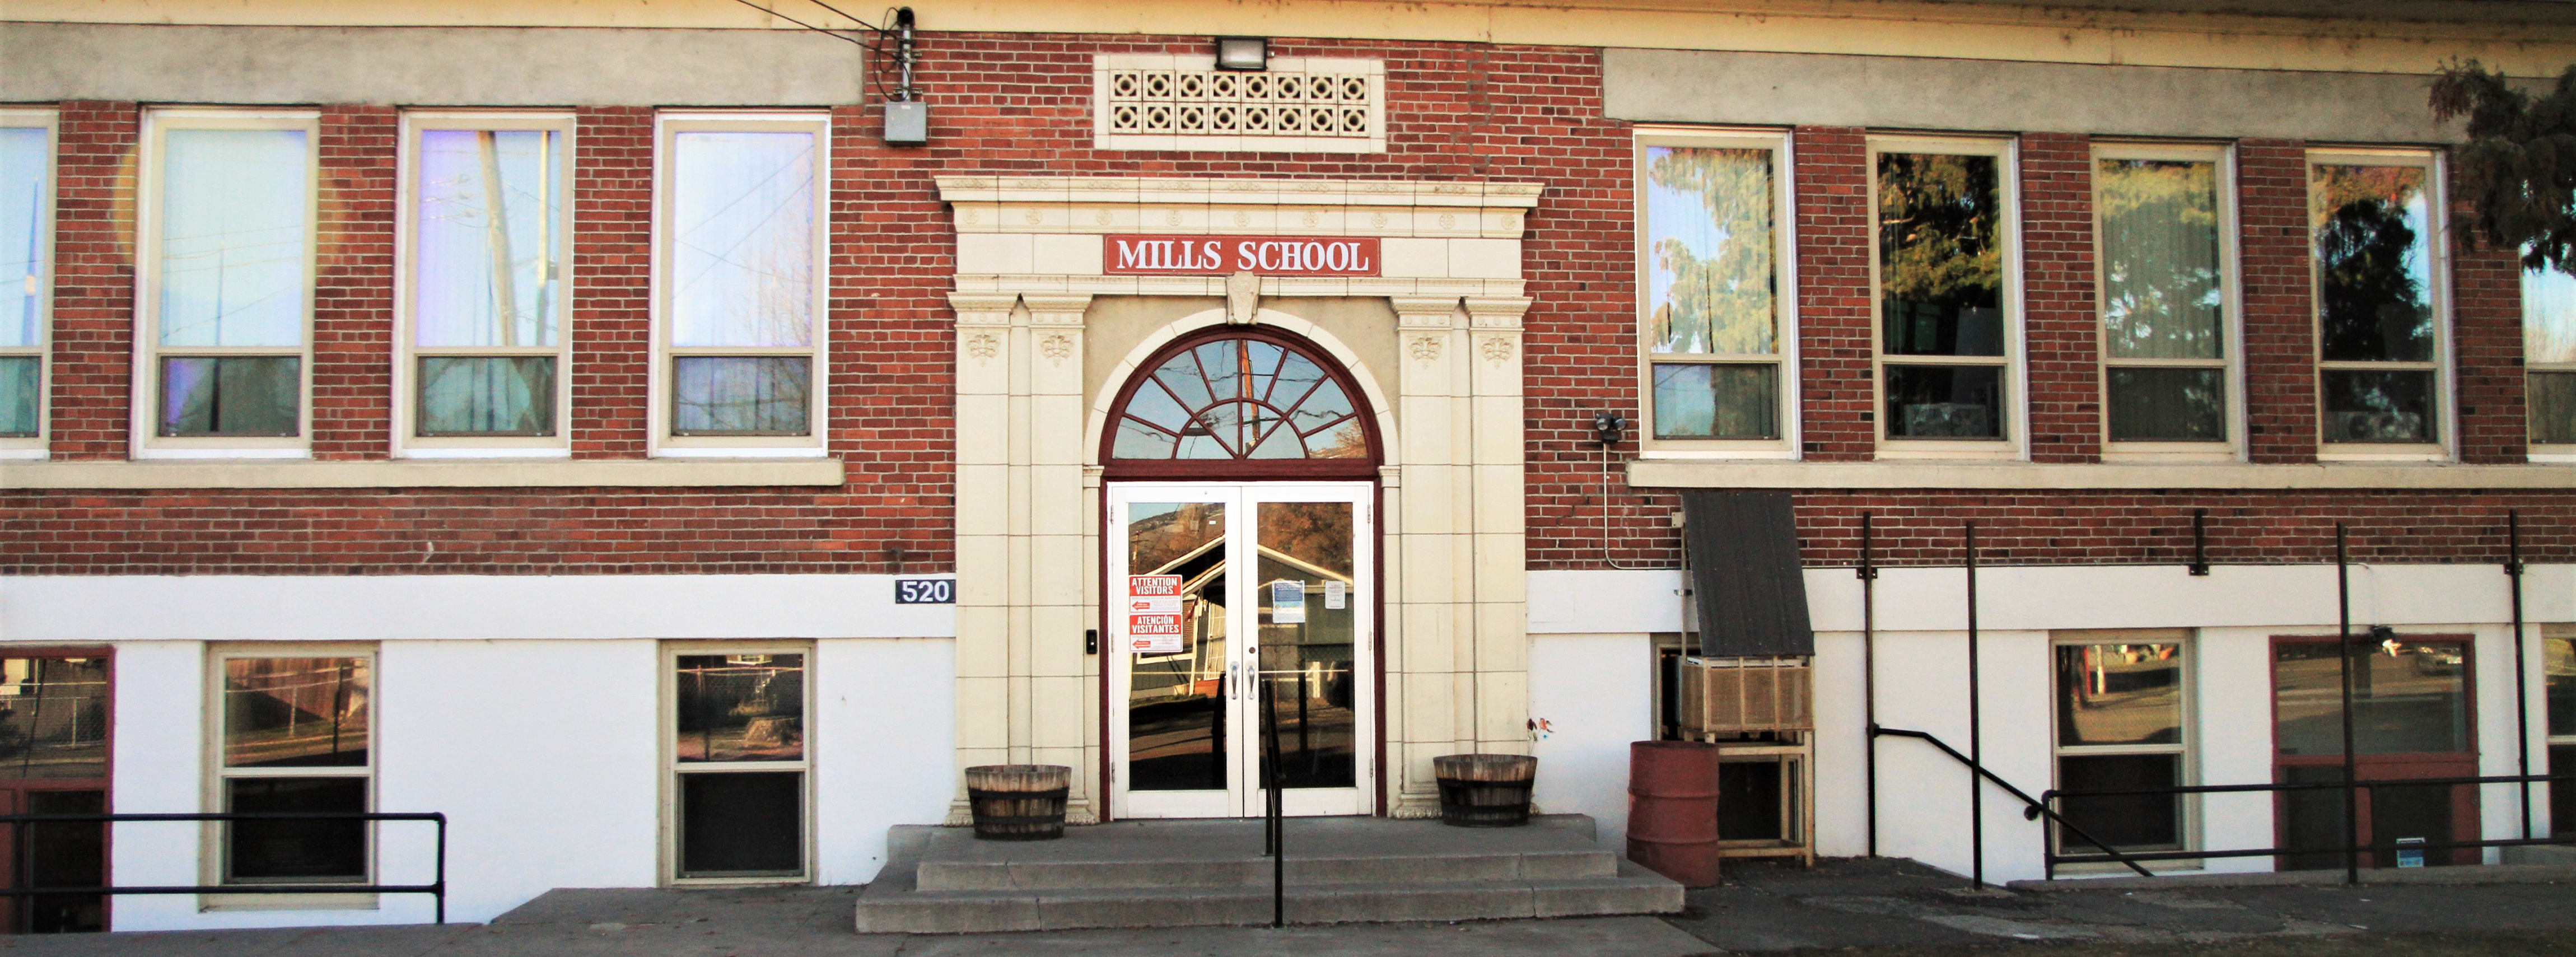 Mills Elementary School